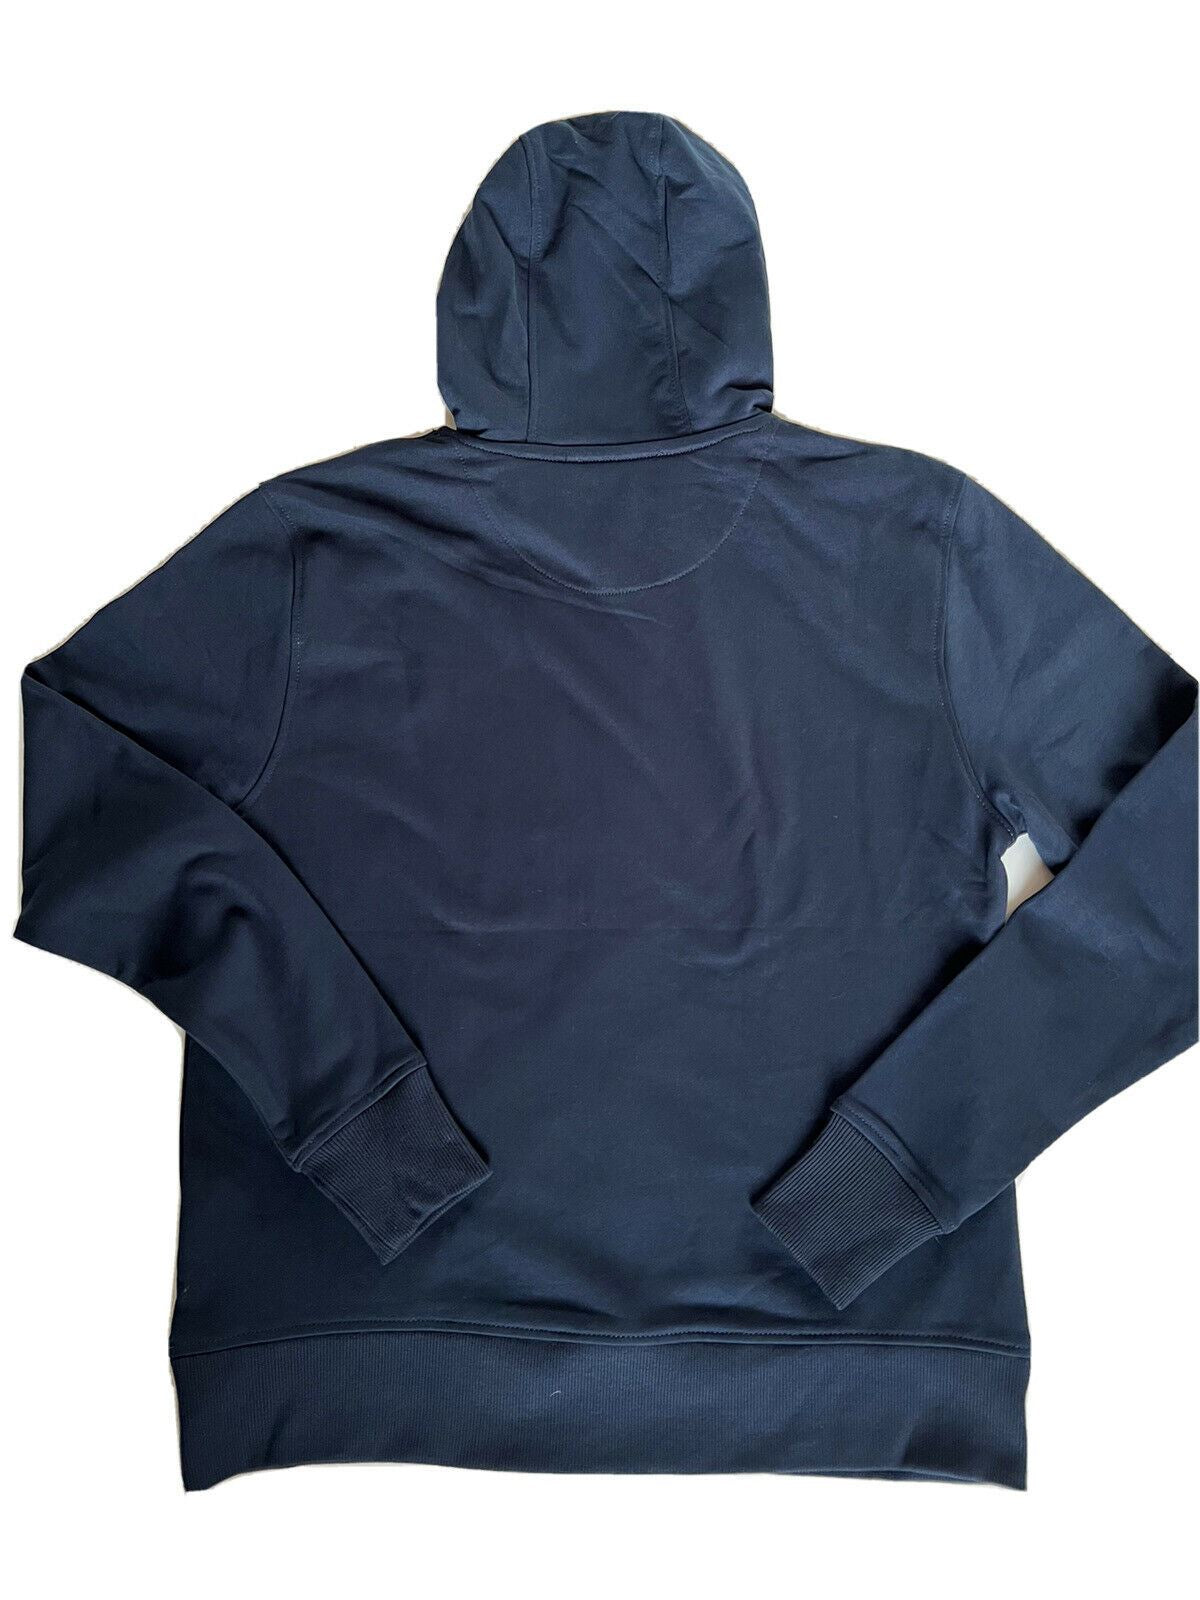 NWT $495 Roberto Cavalli Men's Navy Hoodie Sweater Small